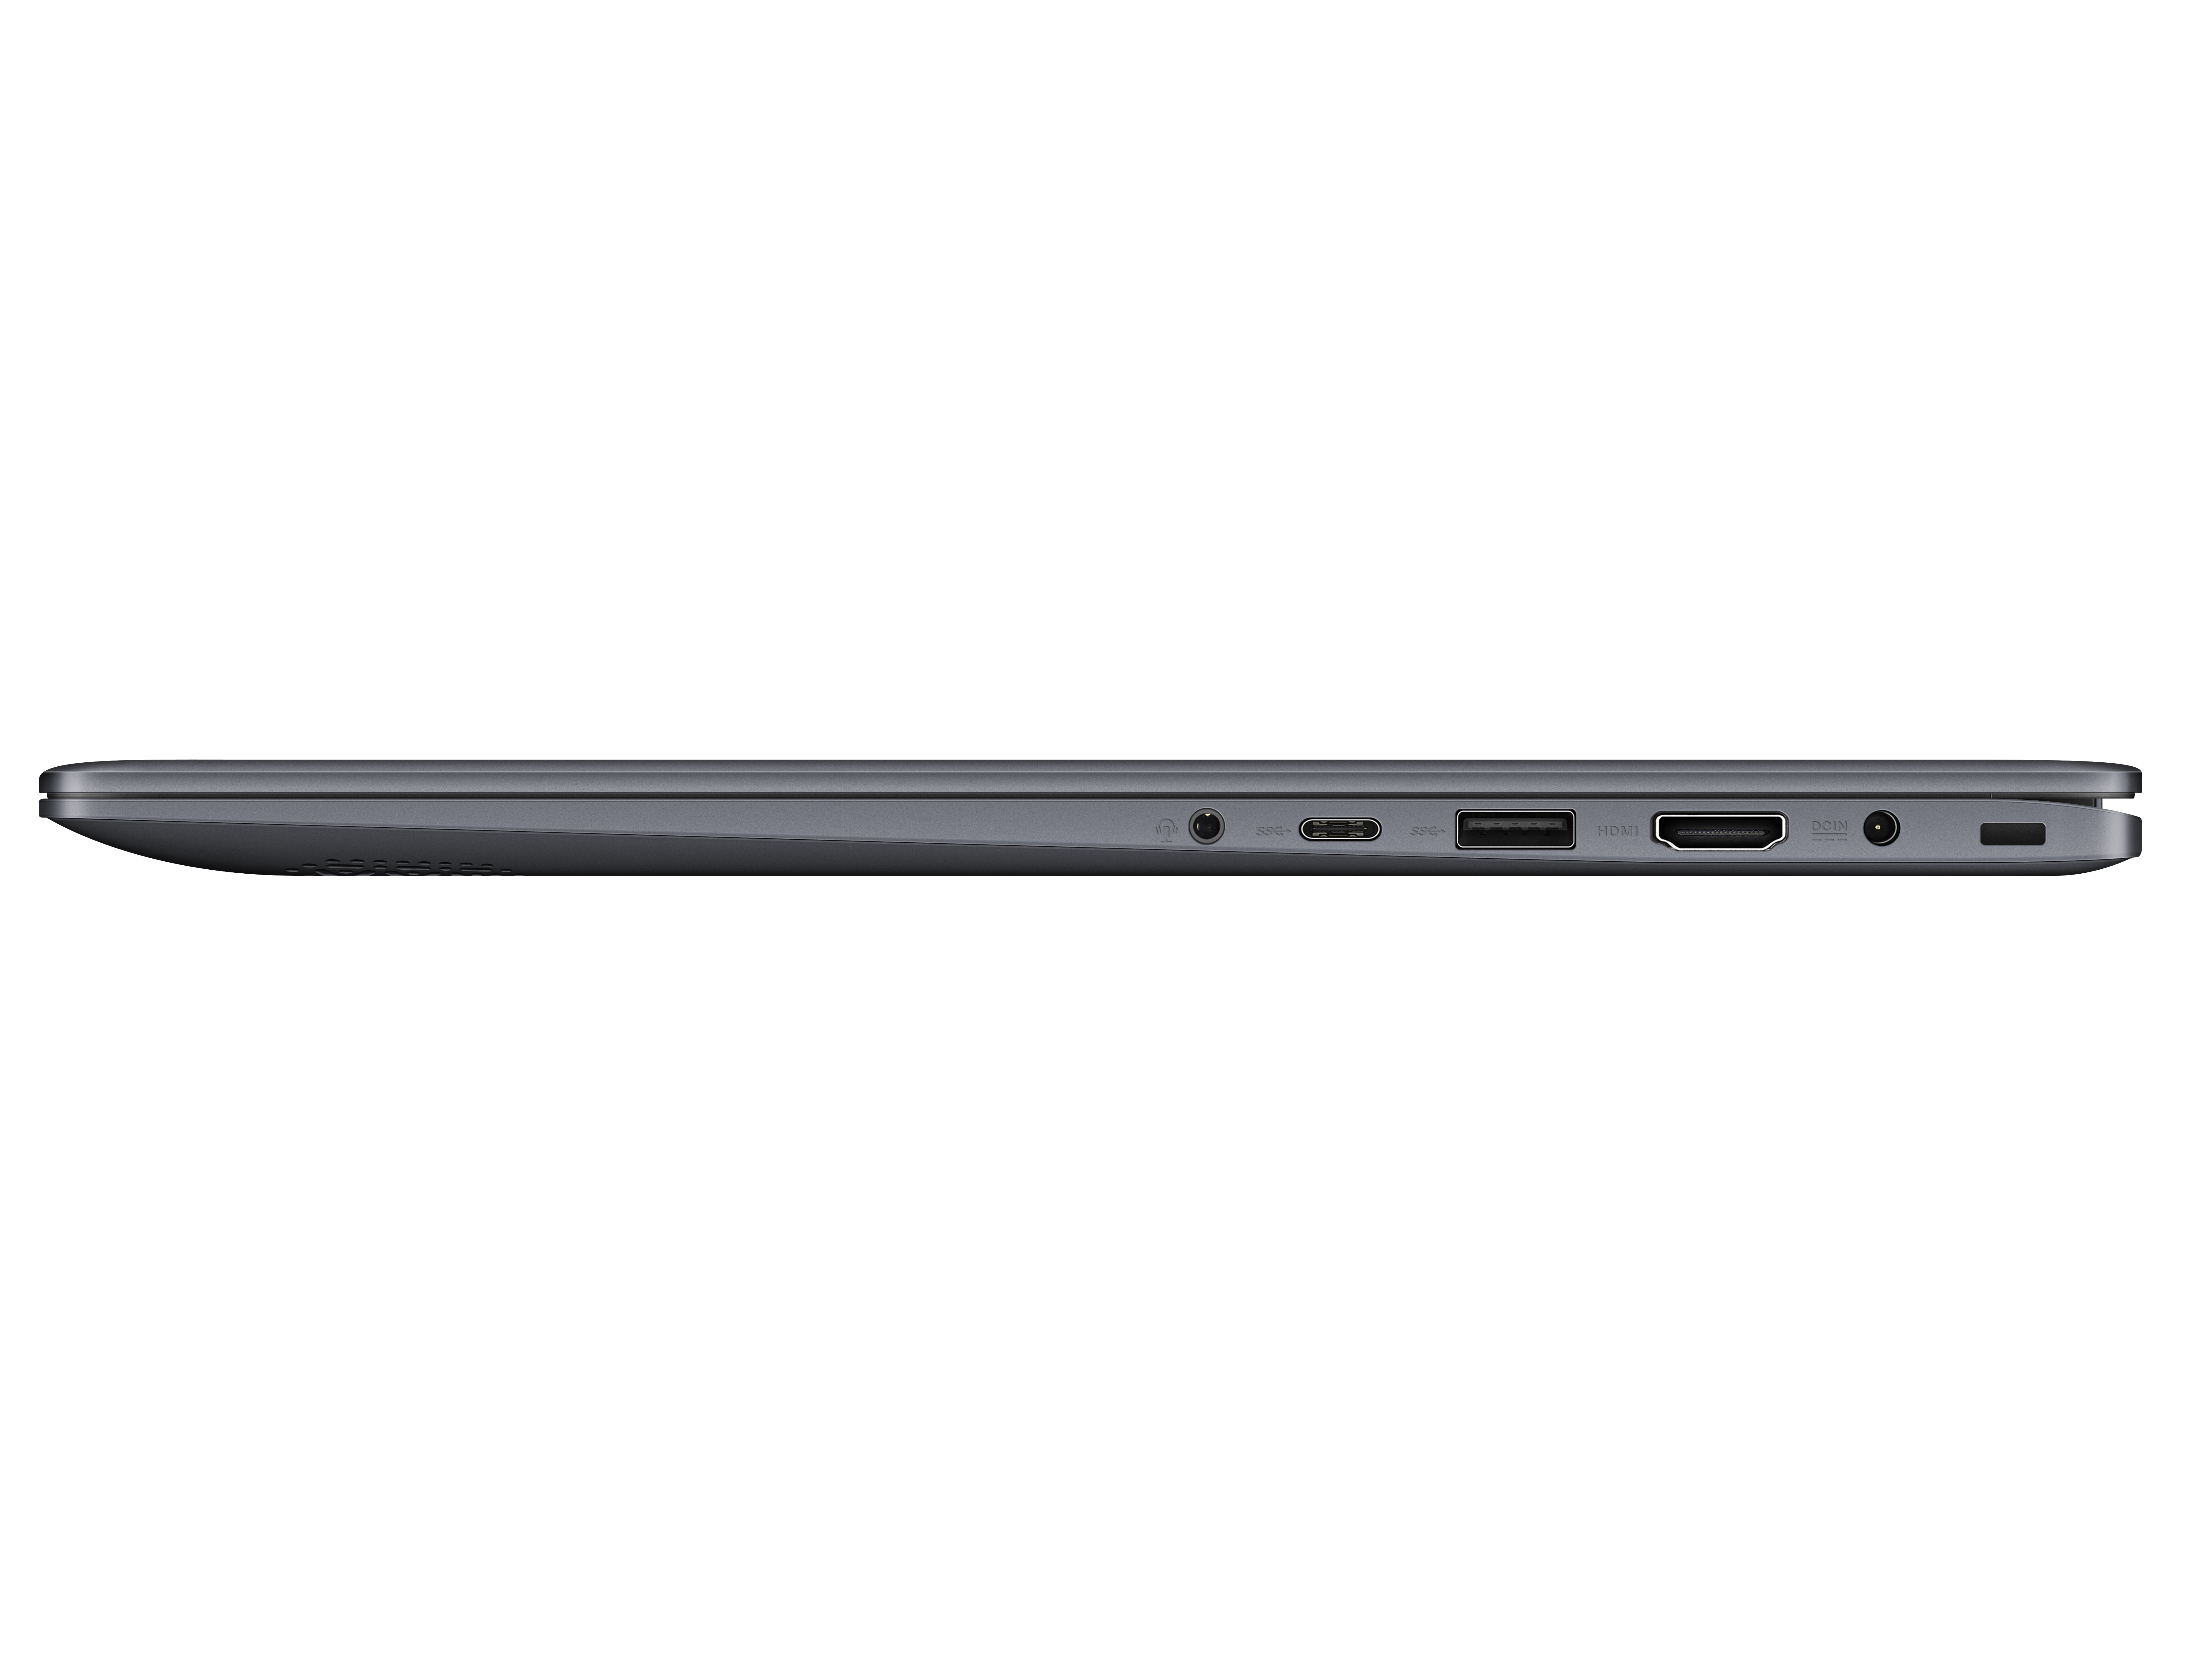 ASUS VivoBook Flip 14 Laptop, 14" FHD Touch, Intel Core i3-10110U, 4GB DDR4, 128GB SSD, Fingerprint, Windows 10 Home in S Mode, Star Gray, TP412FA-WS31T - image 3 of 9